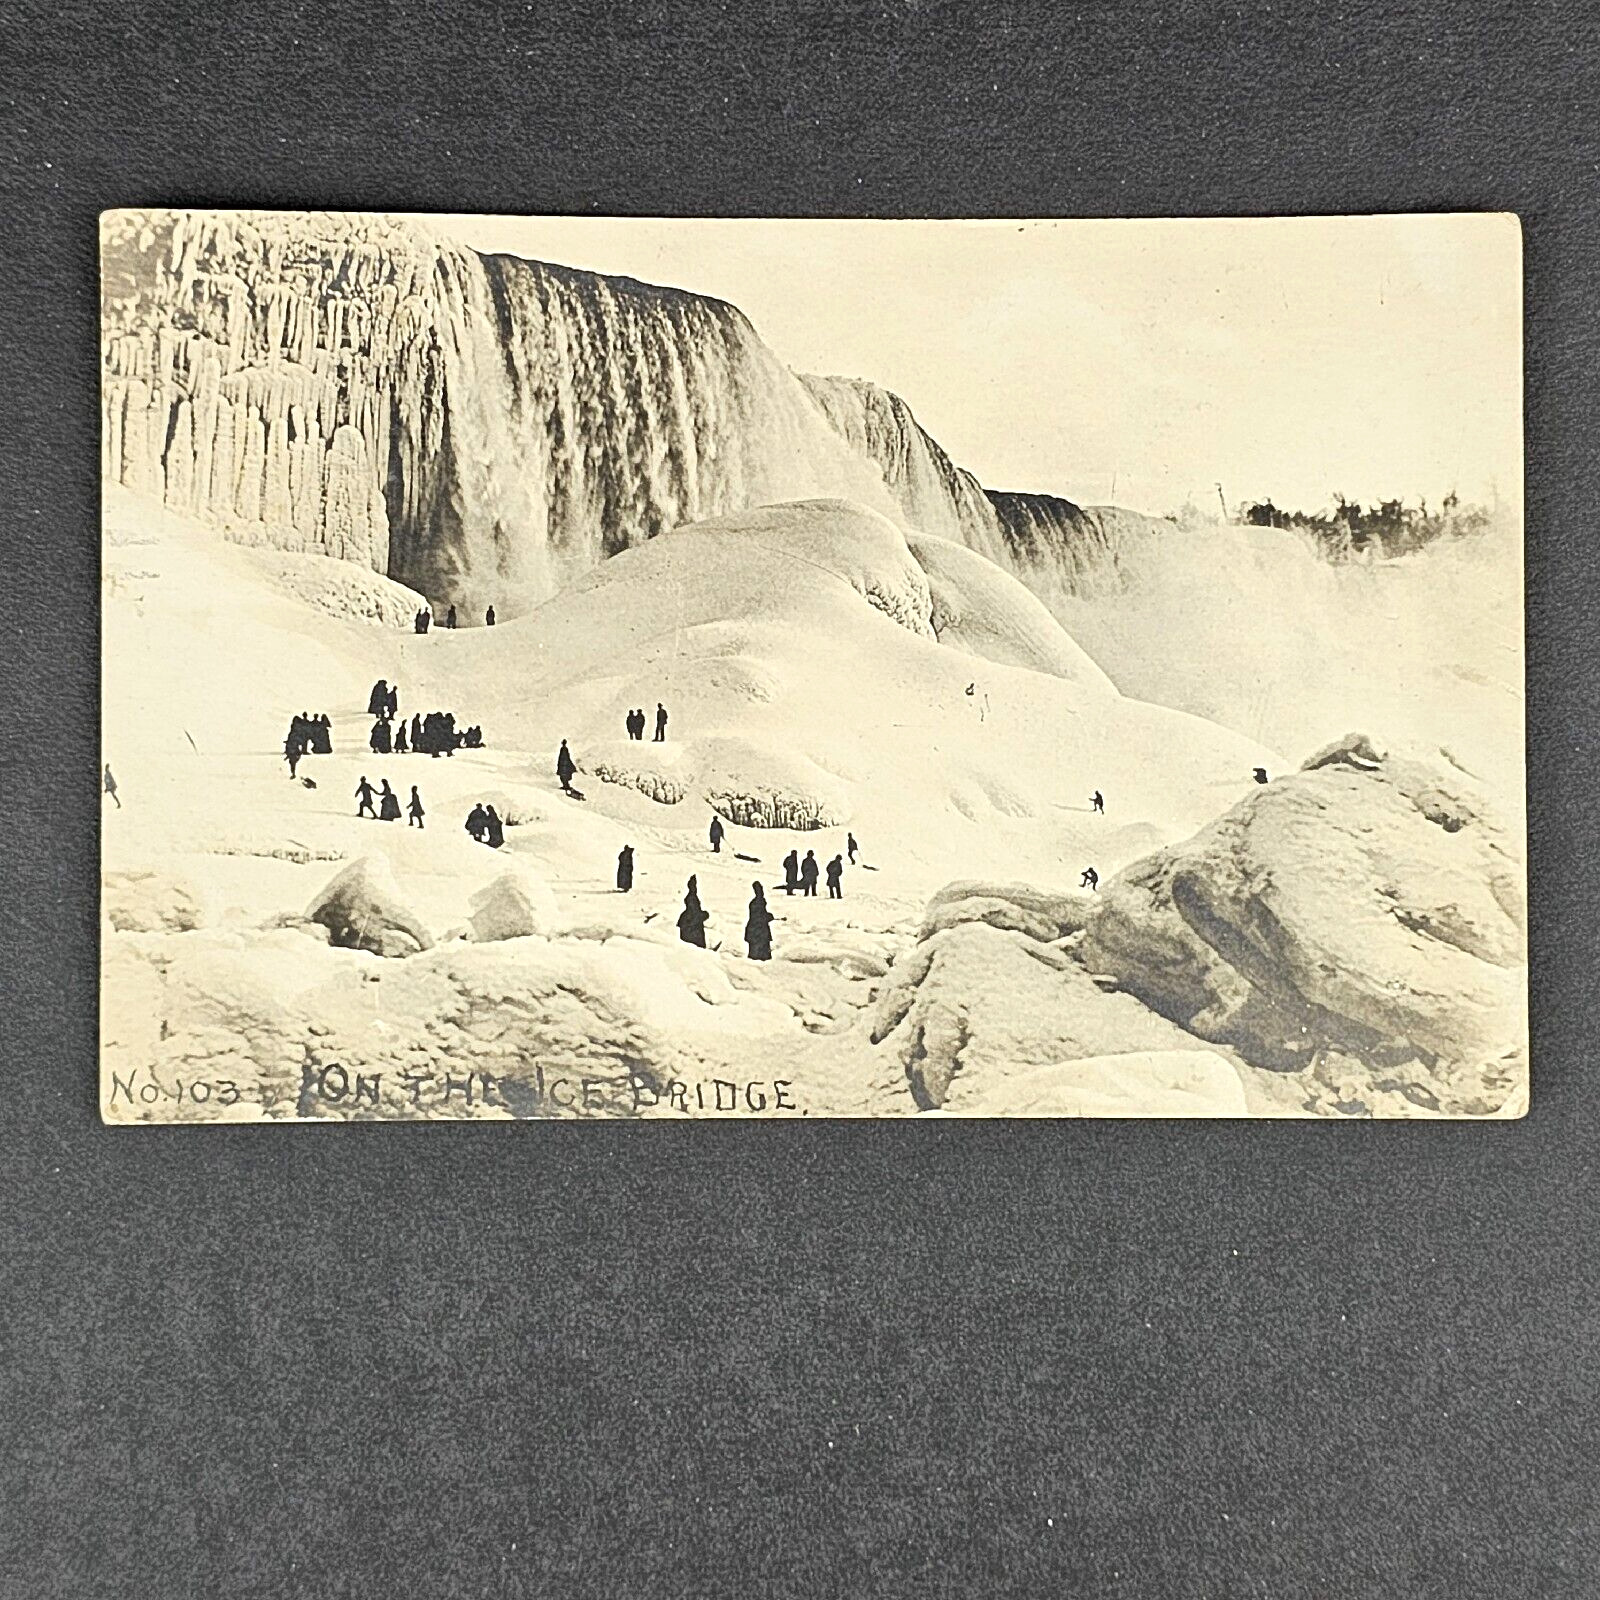 ANTIQUE 1920 REAL PHOTO POST CARD RPPC OF THE ICE BRIDGE AT NIAGARA FALLS, NY